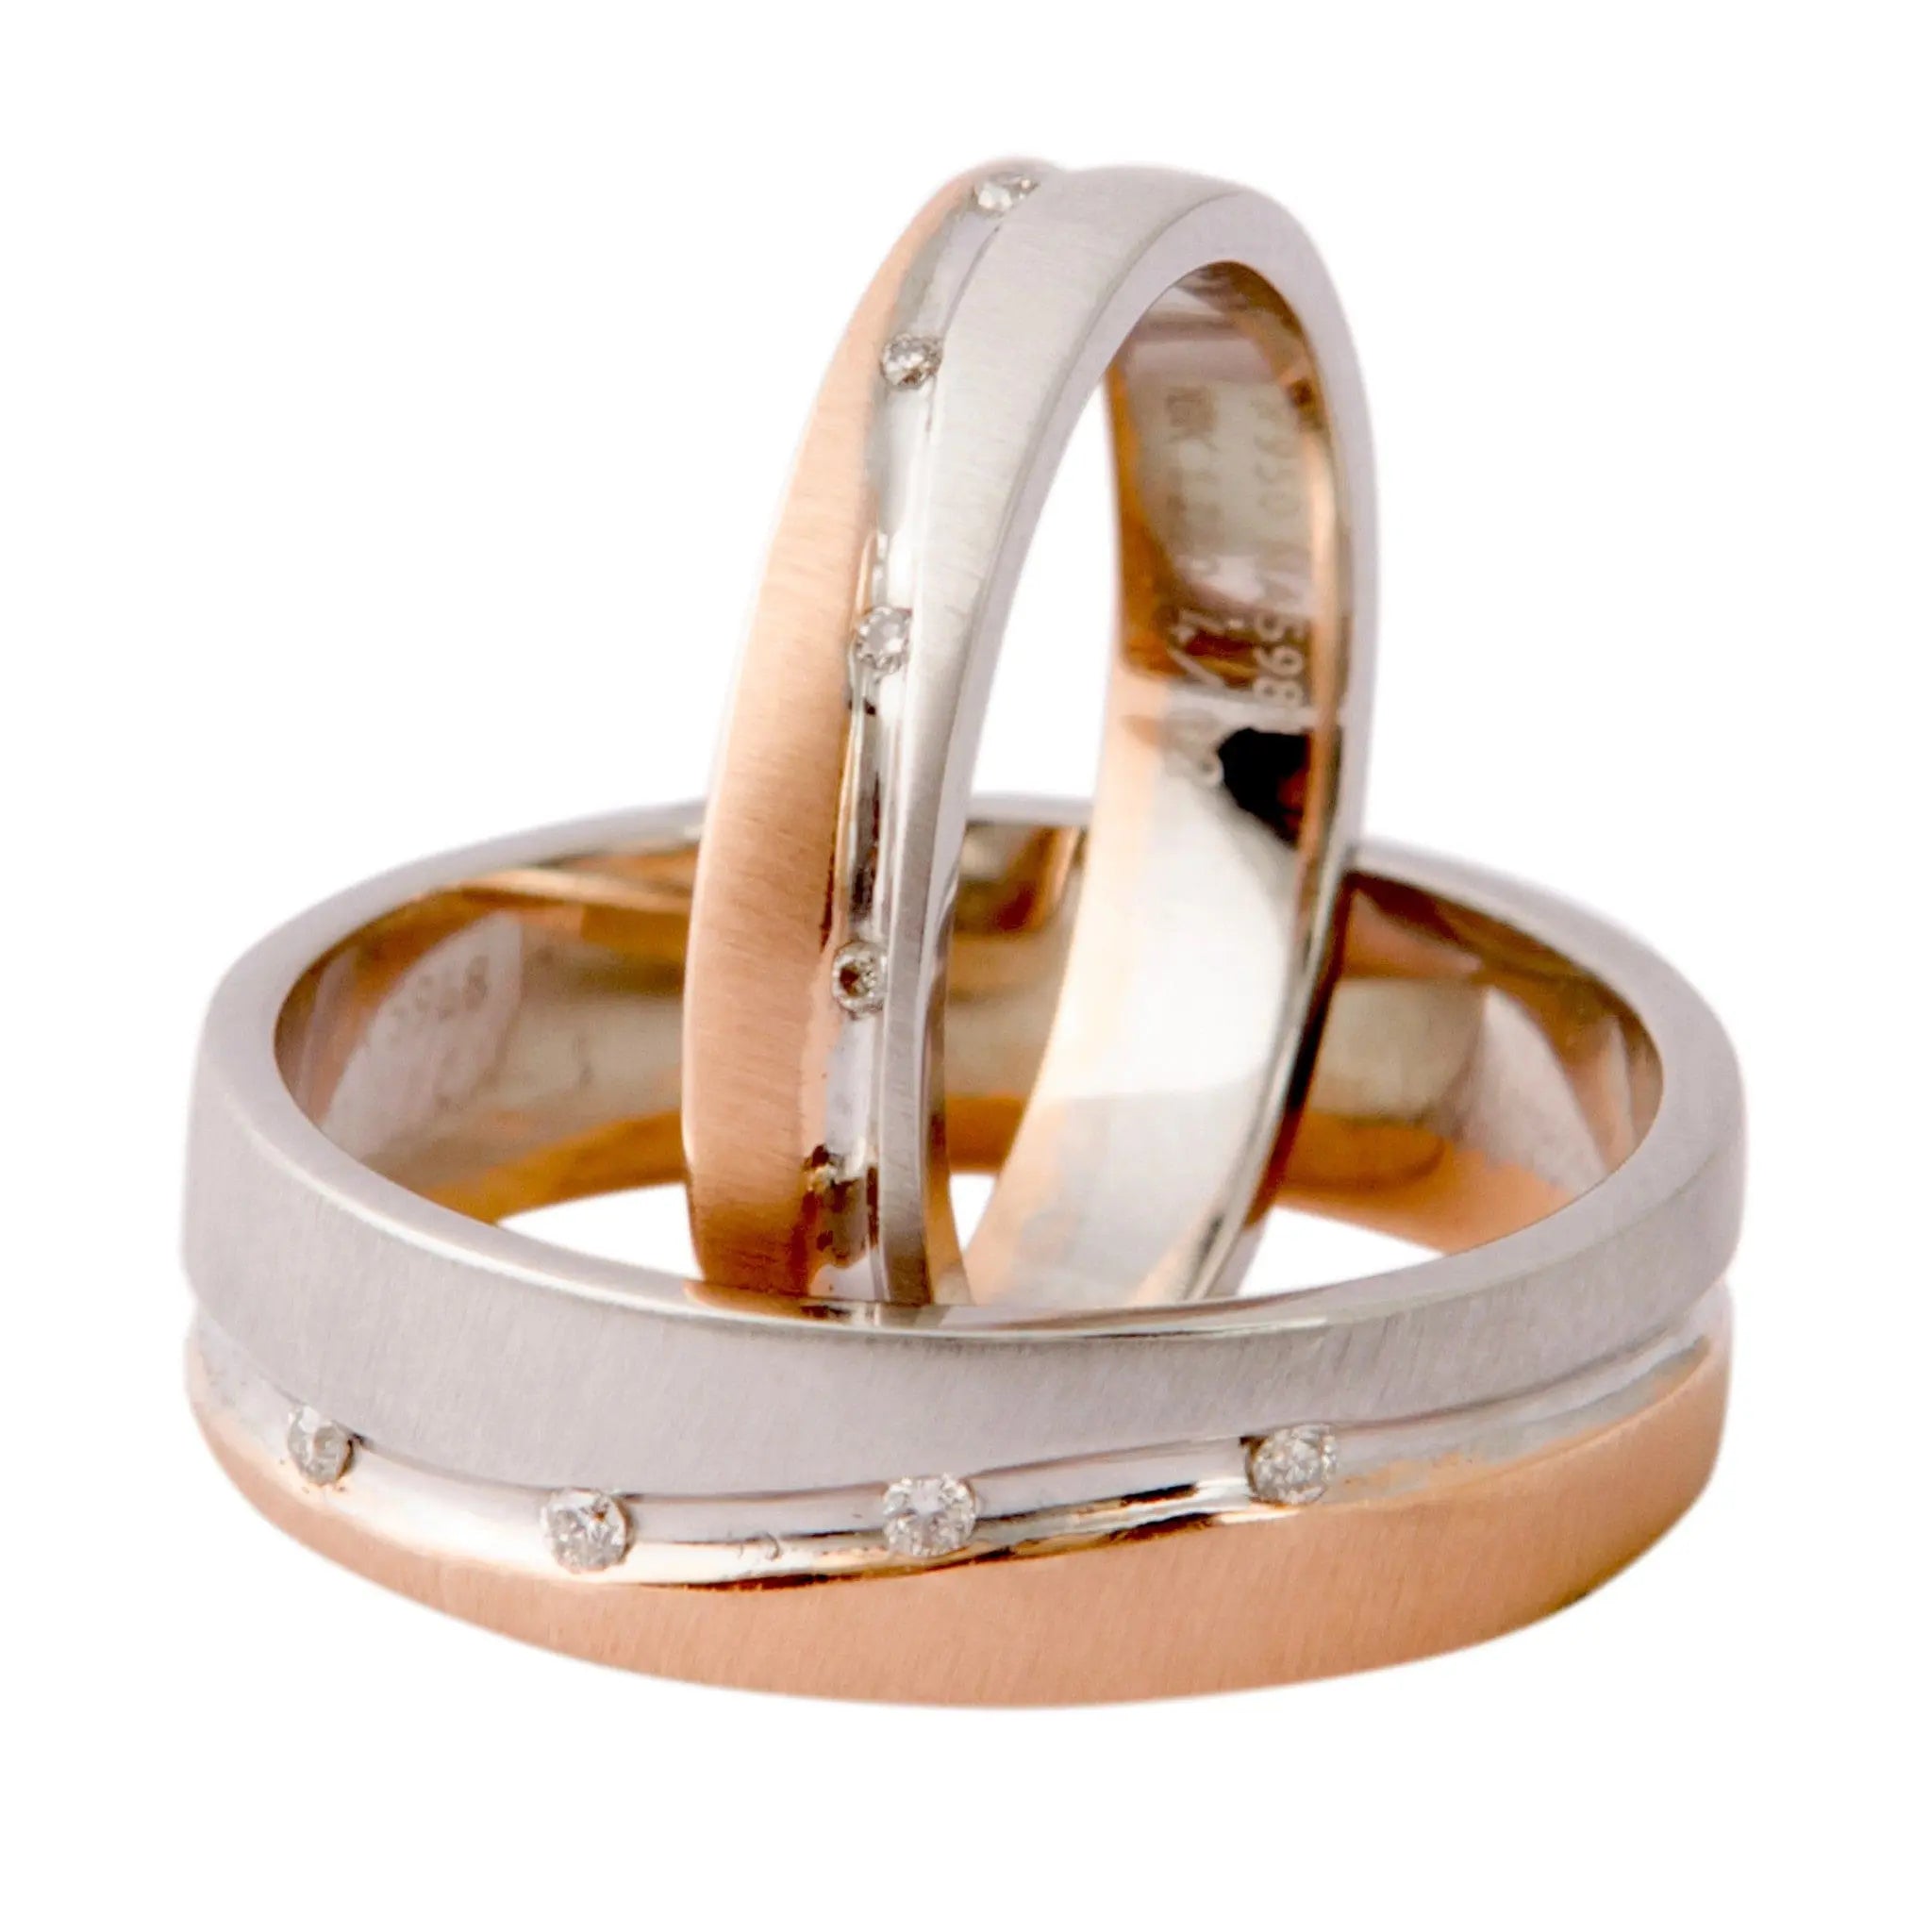 Platinum Couple Rings with Diamonds - Spark of Love - JL PT 600